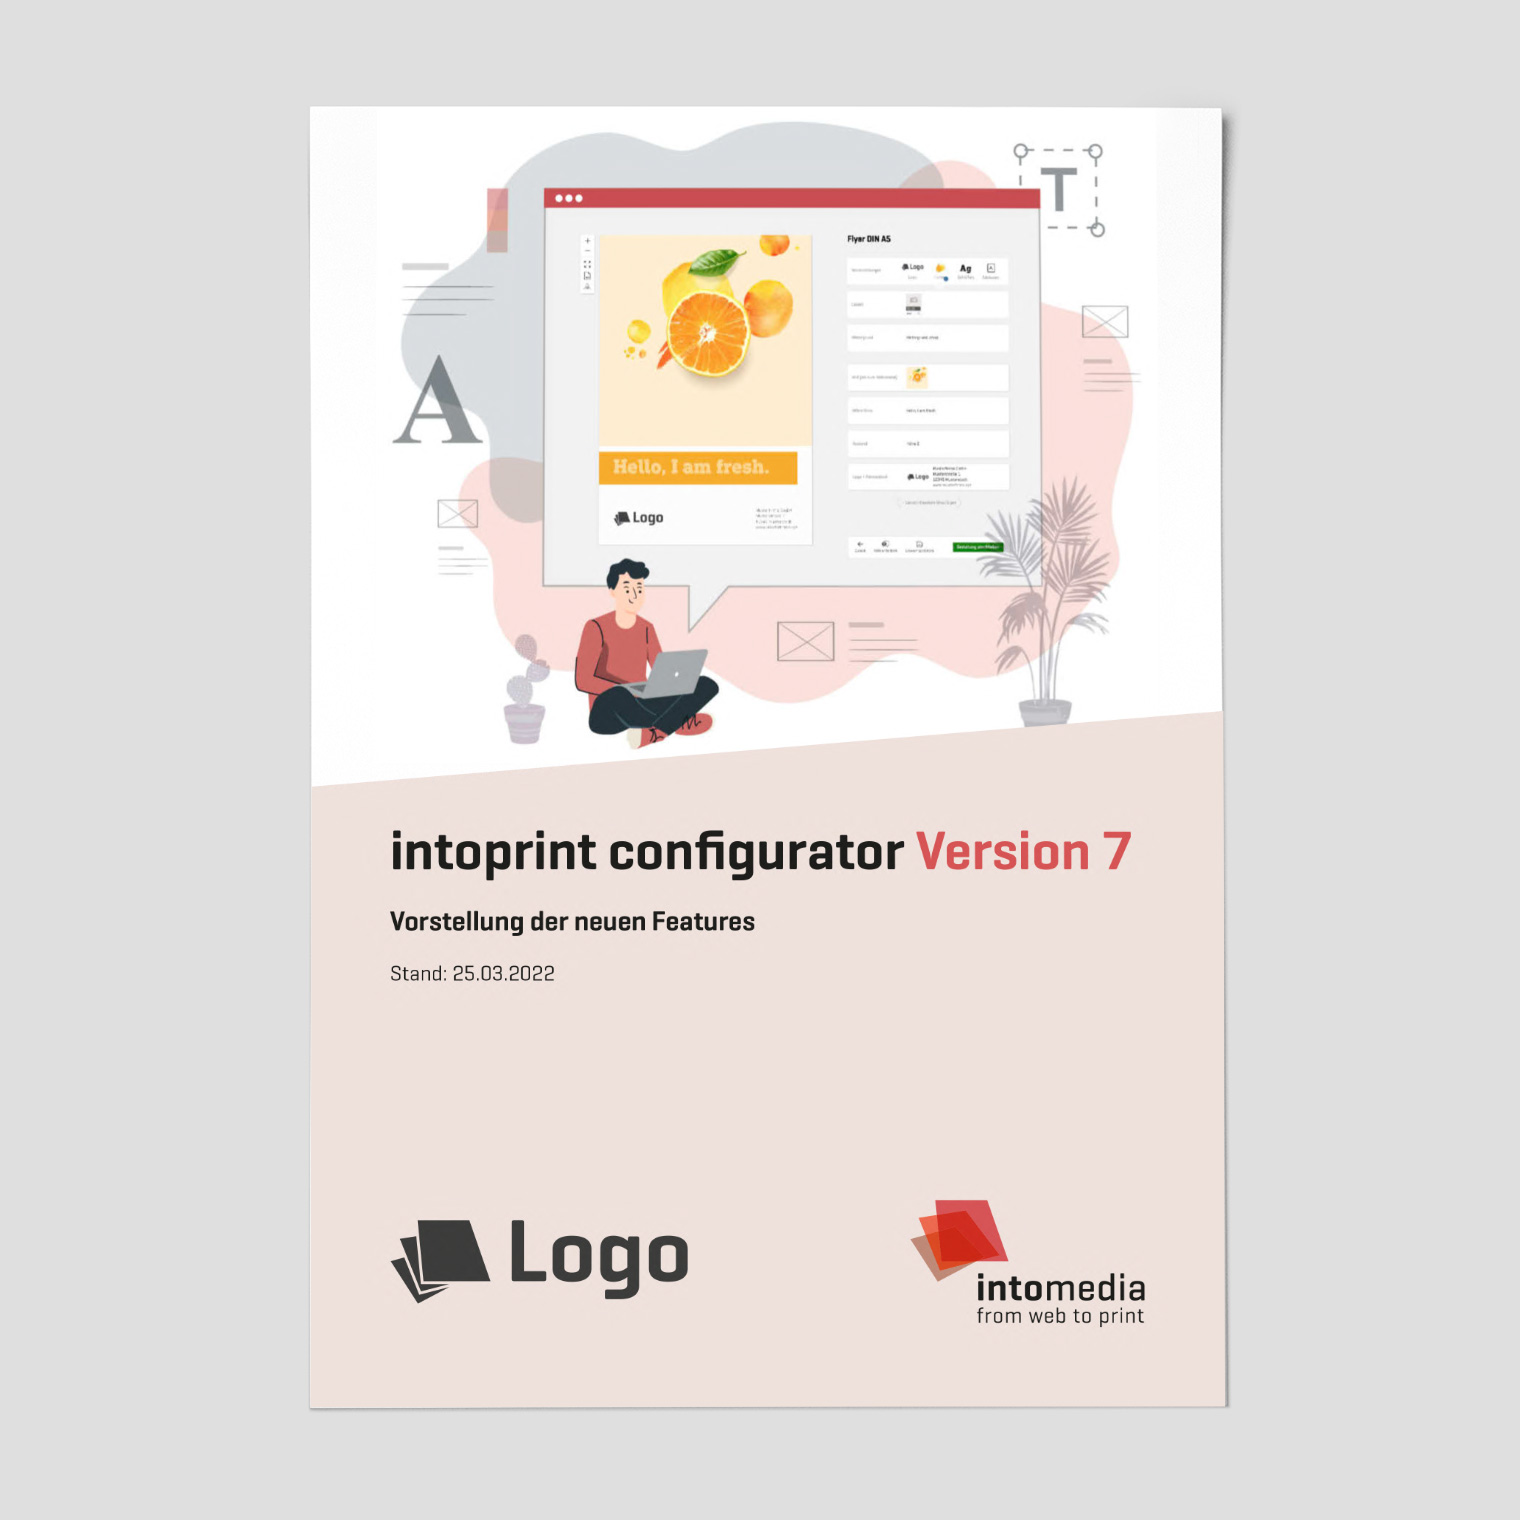 intoprint configurator Version 7